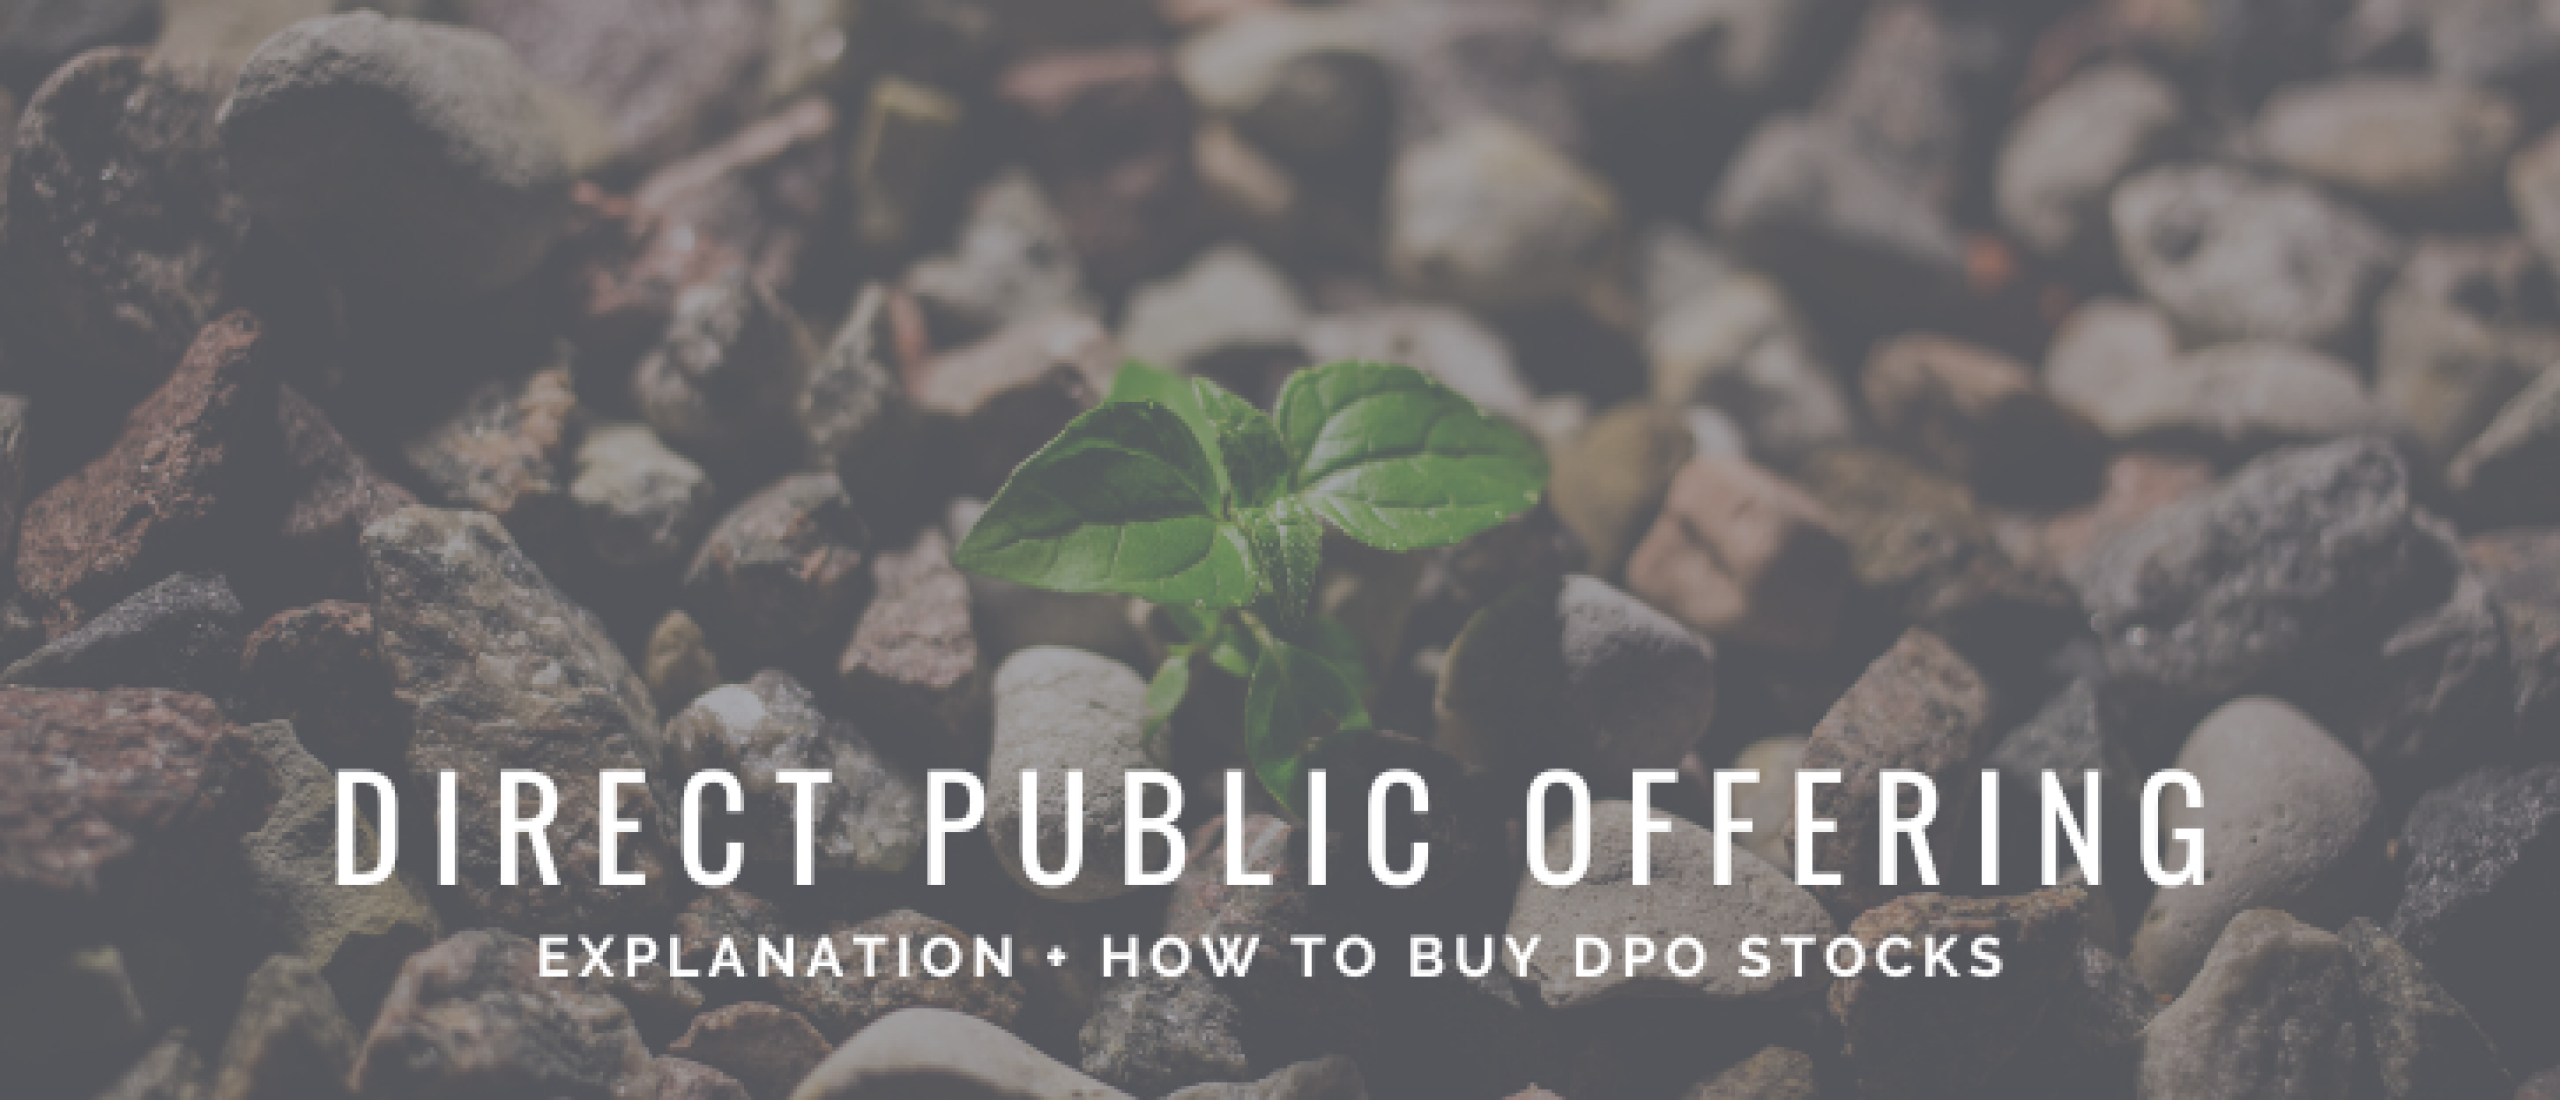 Direct Public Offering (DPO) Explained | Happy Investors